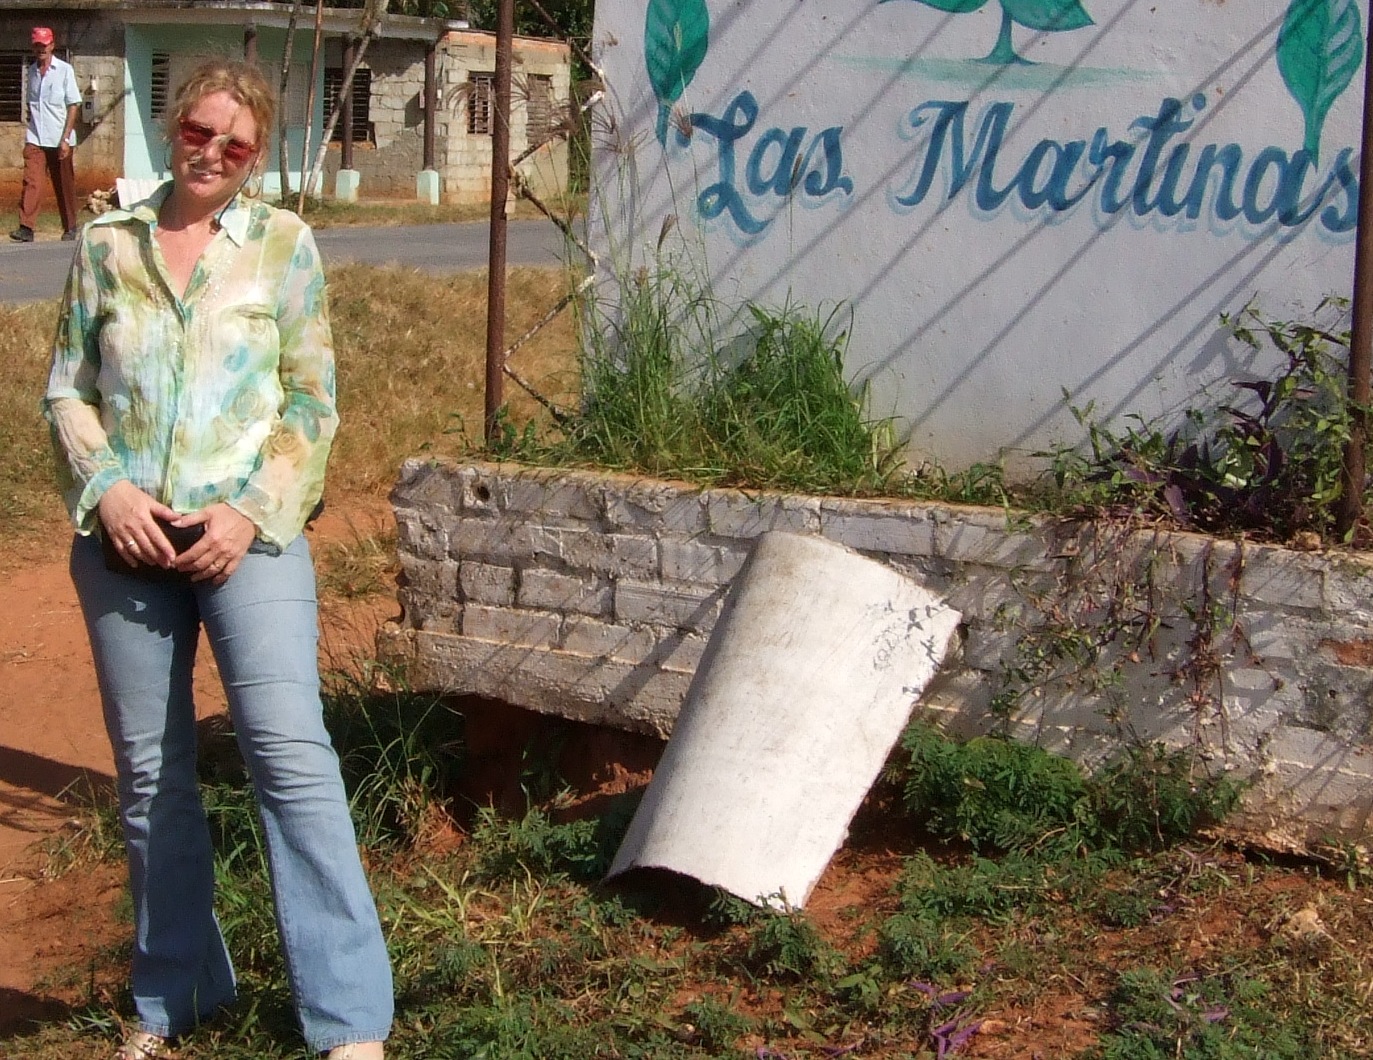 Martina Miethig als Reisereporterin im äußersten Landeszipfel Kubas in Las Martinas